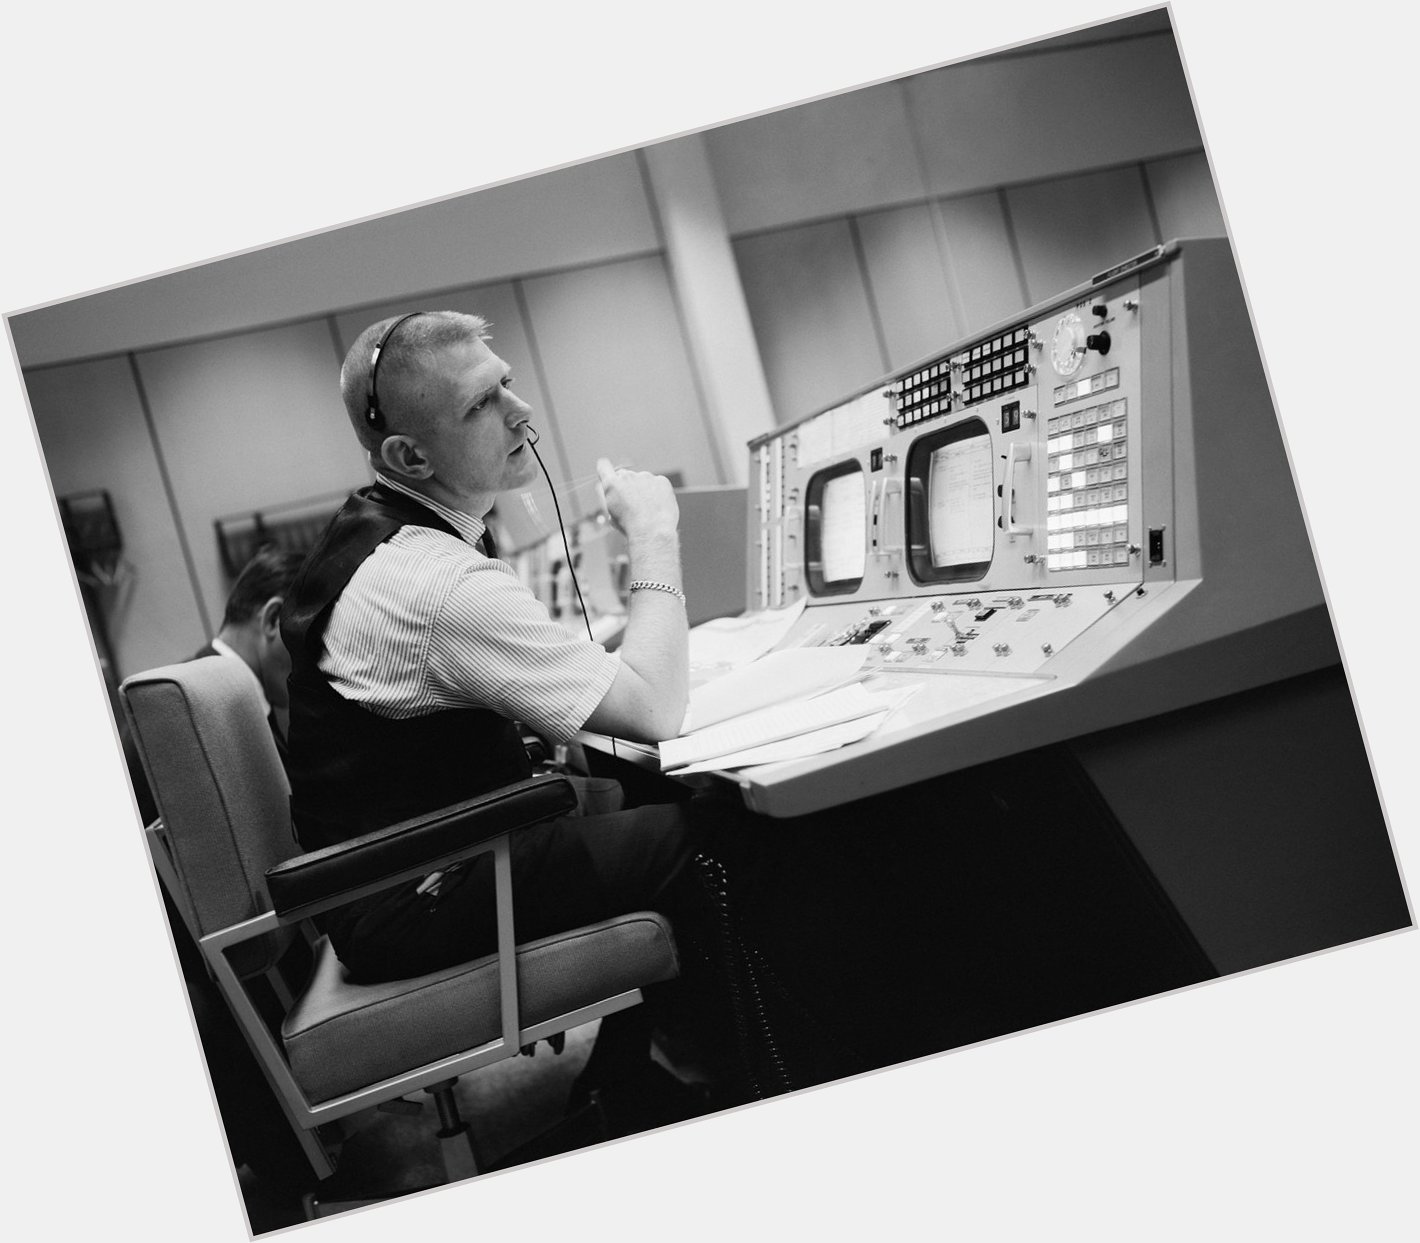 Happy Birthday to Gene Kranz, flight director for Apollo 11 & 13 